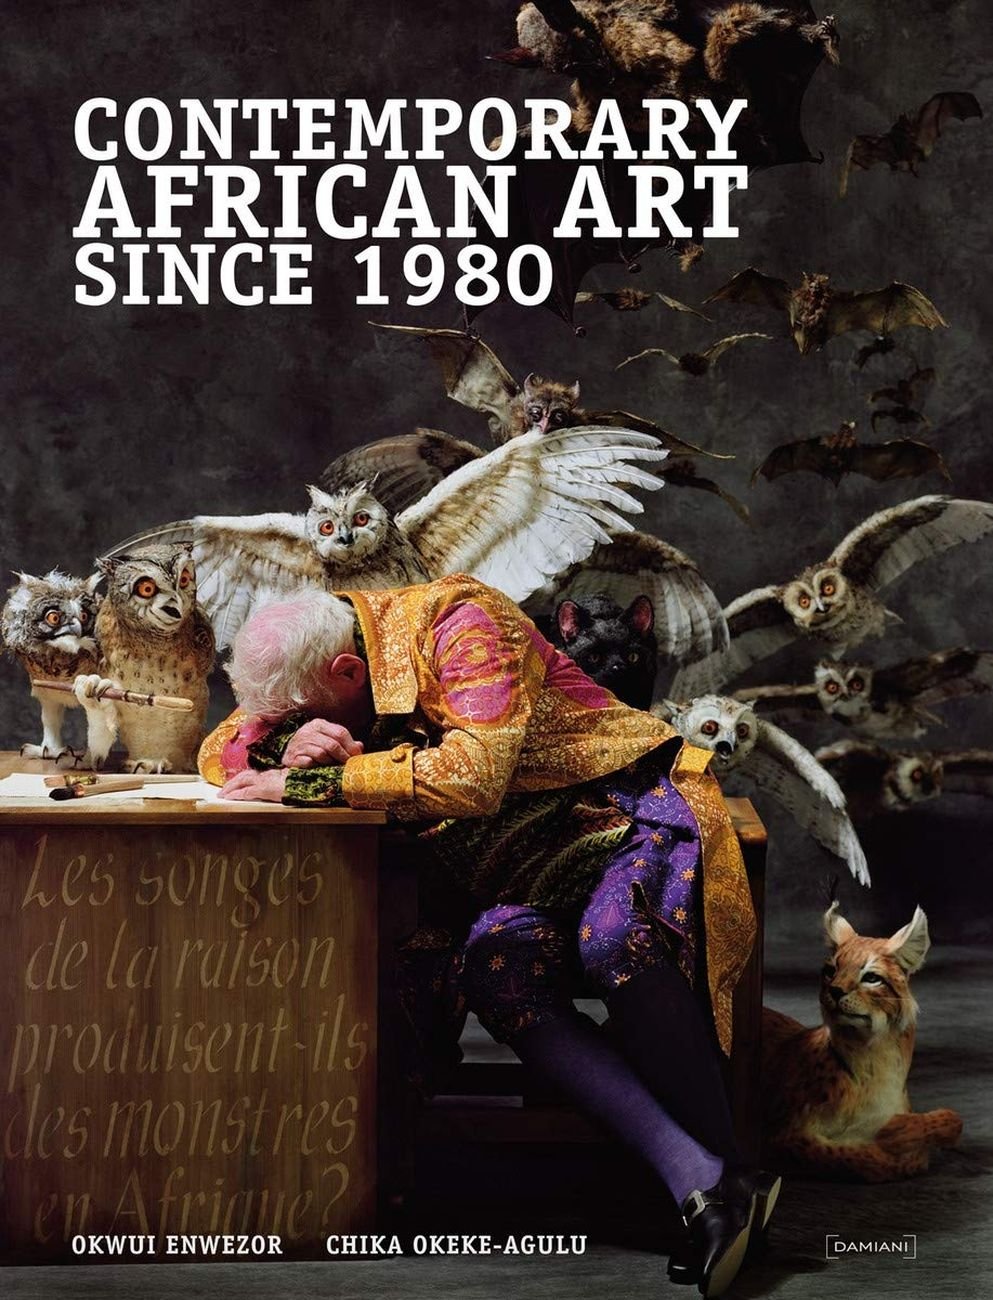 Okwui Enwezor & Chika Okeke Agulu – Contemporary African Art Since 1980 (Damiani, Bologna 2009)